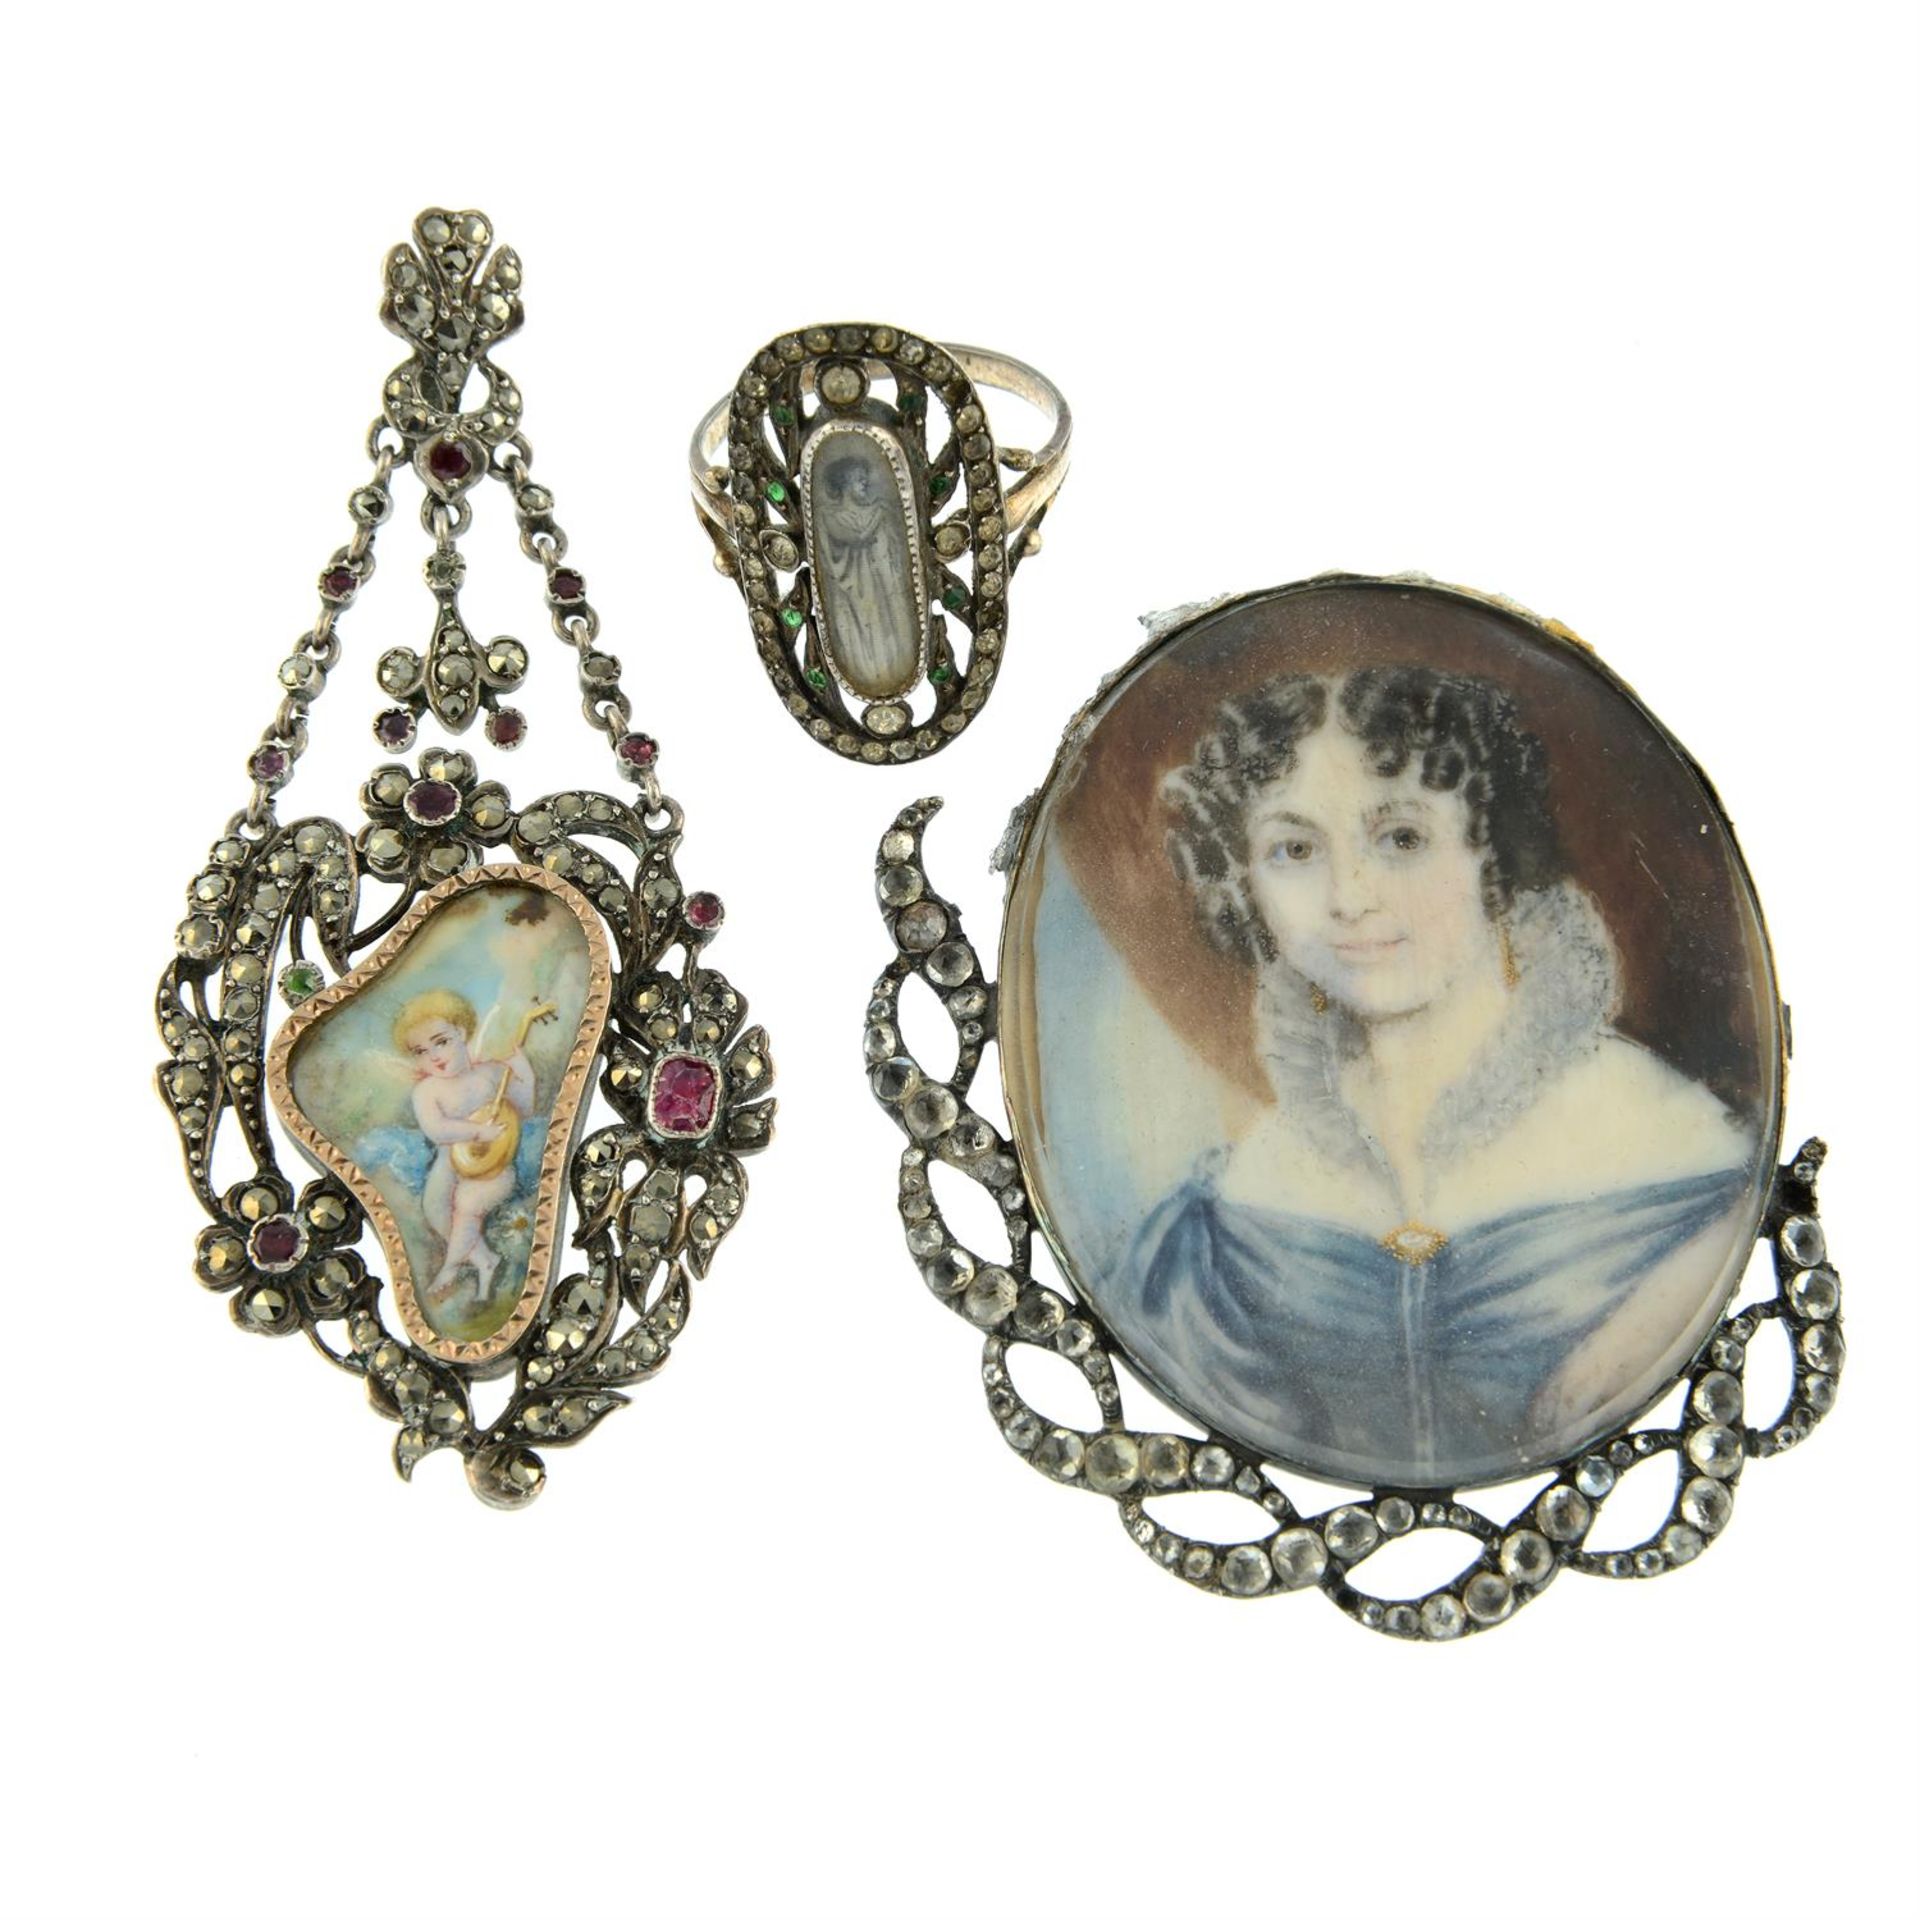 Three items of late 19th century ivory and gem-set jewellery.